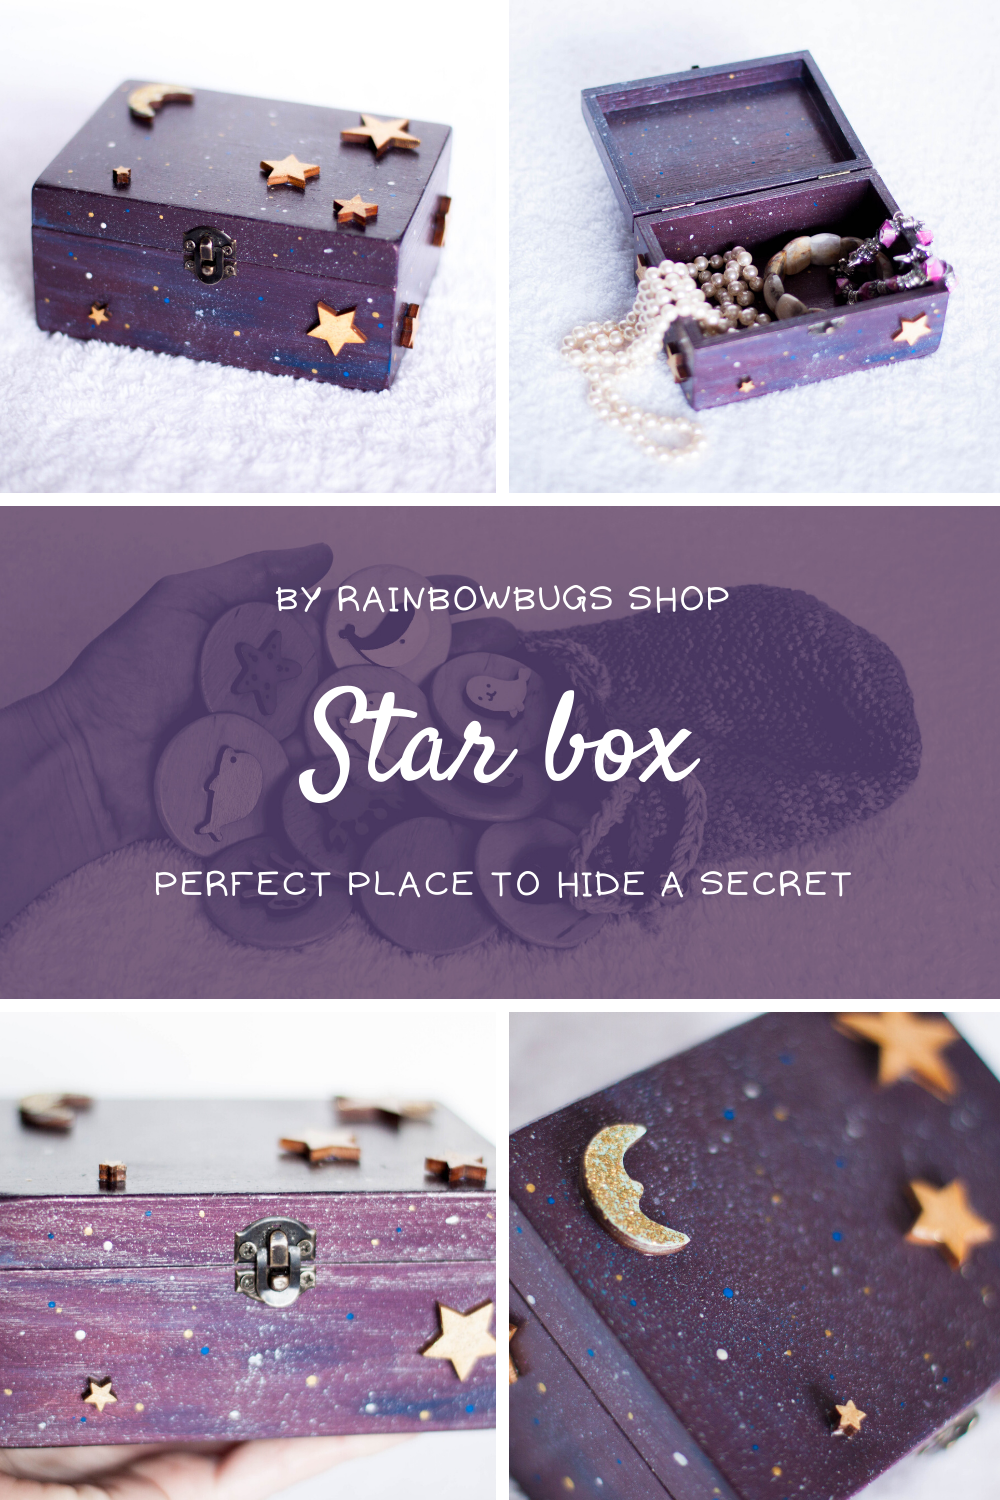 Star box by Rainbowbugs Shop - Star box by Rainbowbugs Shop -   19 diy Box painting ideas